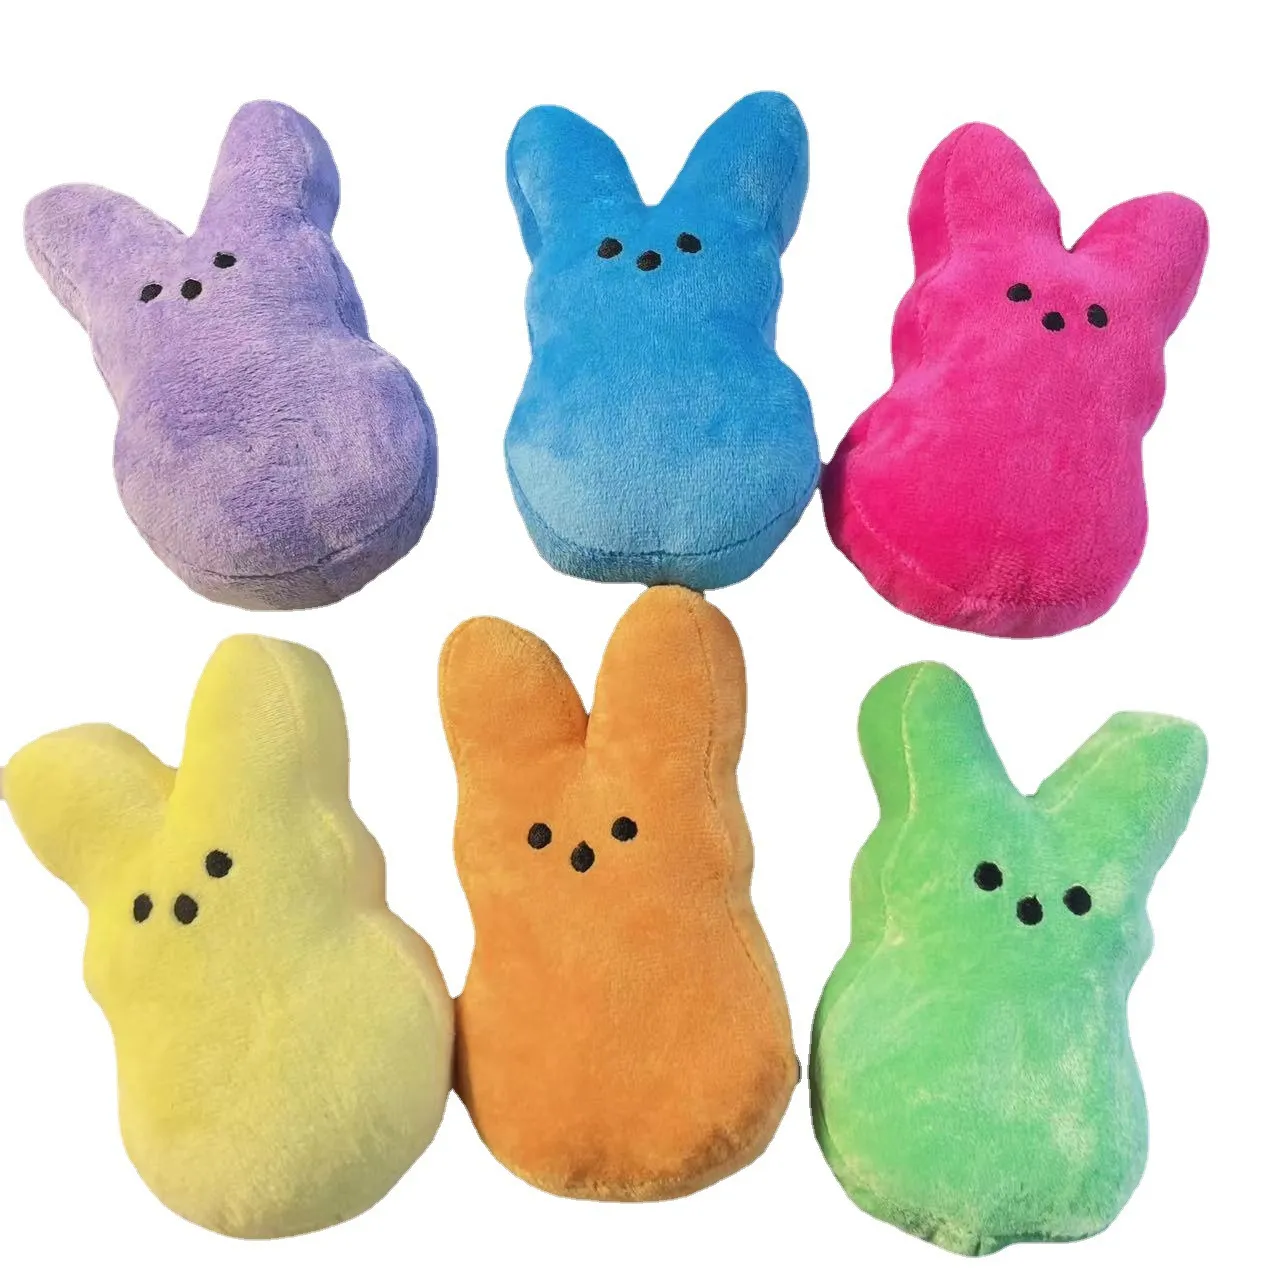 Happy Easter Bunnies Toys 15cm Plush Rabbit Kids Baby Party Gifts Easters Bunny Dolls في 6 ألوان الجملة FY2670 0116